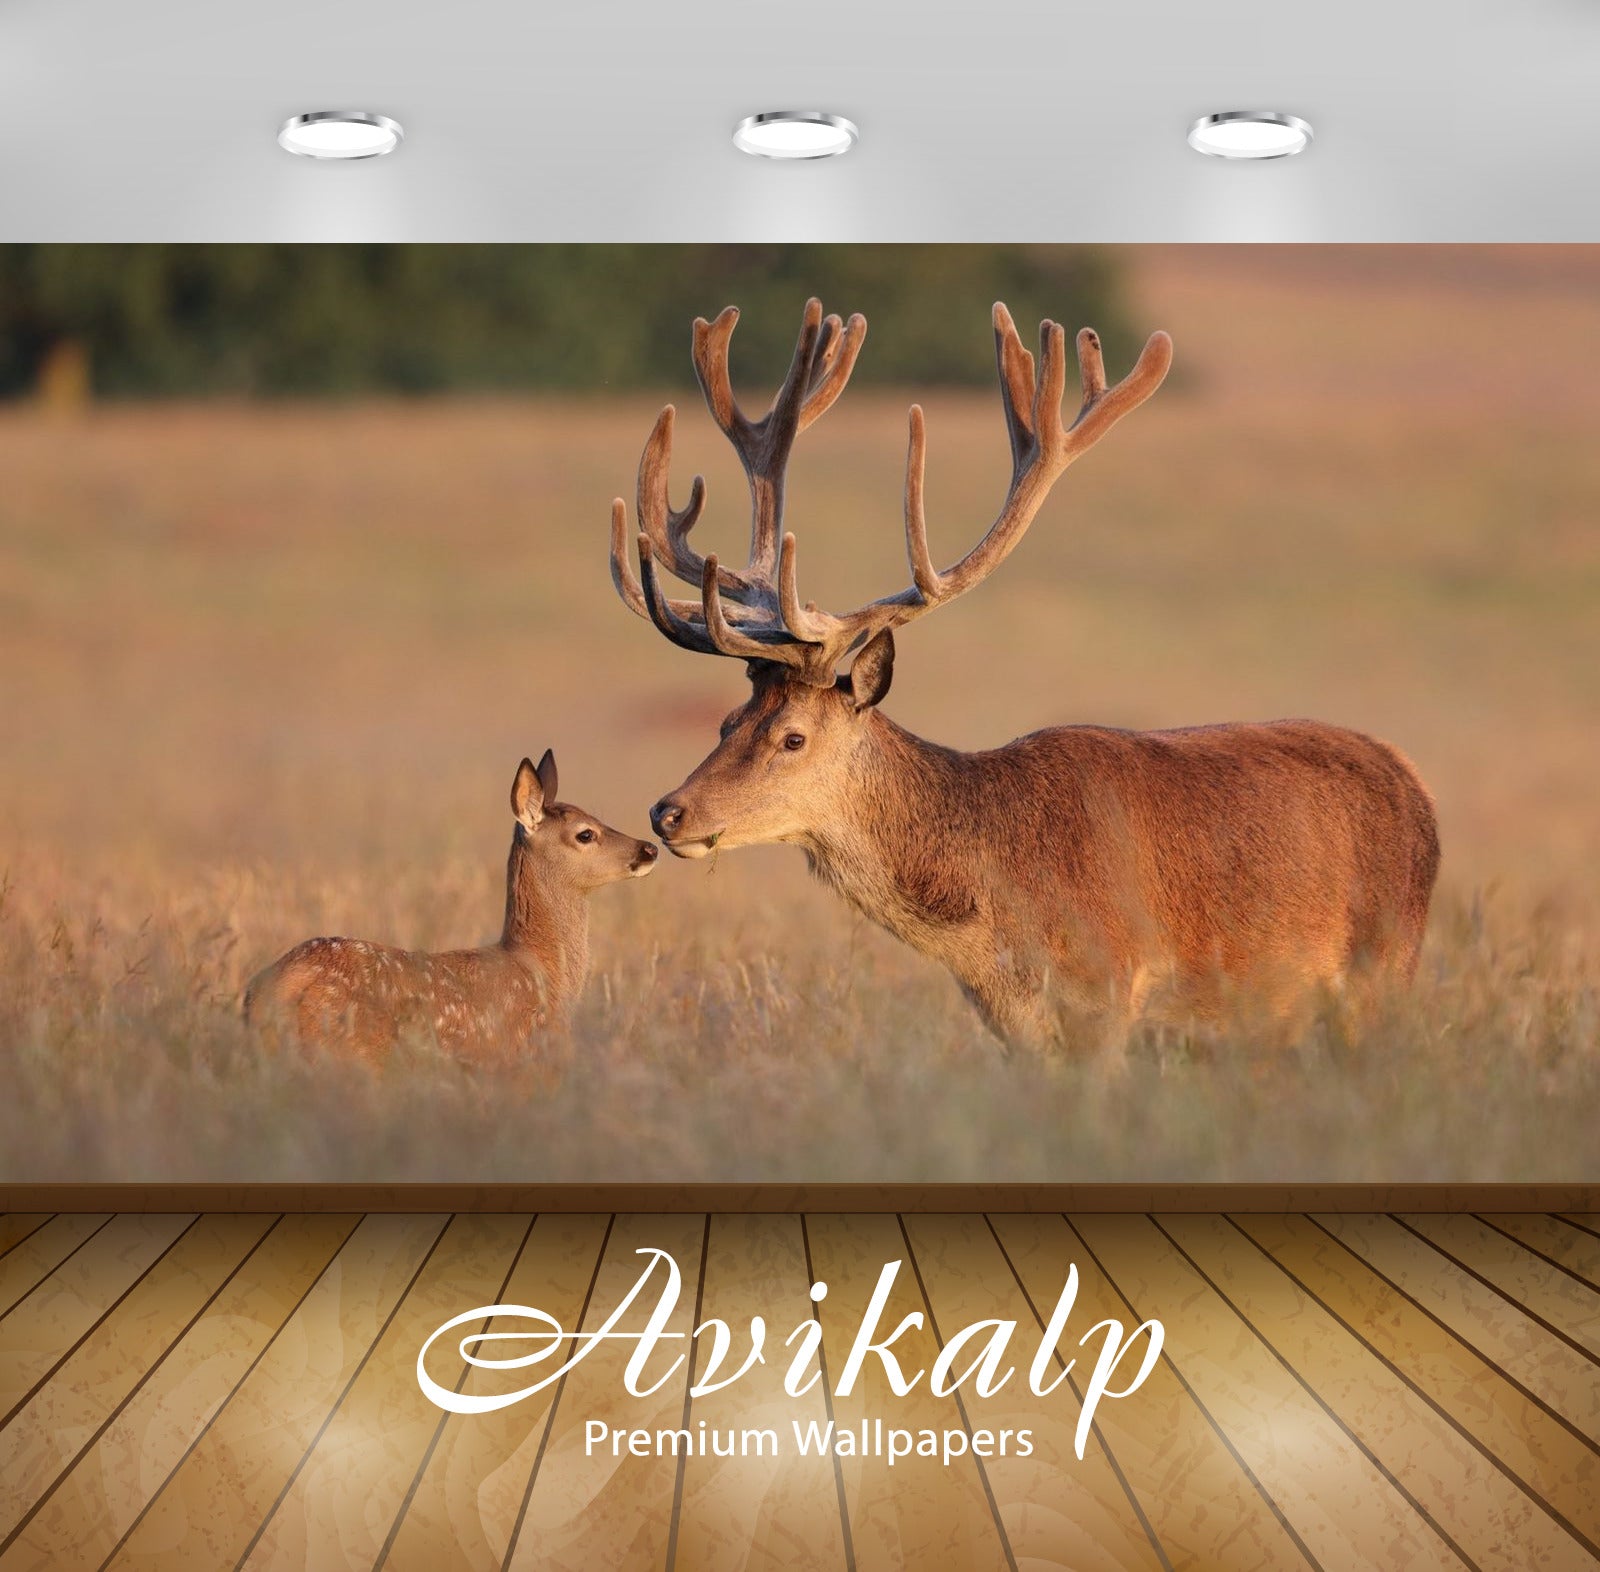 Avikalp Exclusive Awi2935 Red Deer Deer Elk With Large Antlers Full HD Wallpapers for Living room, H